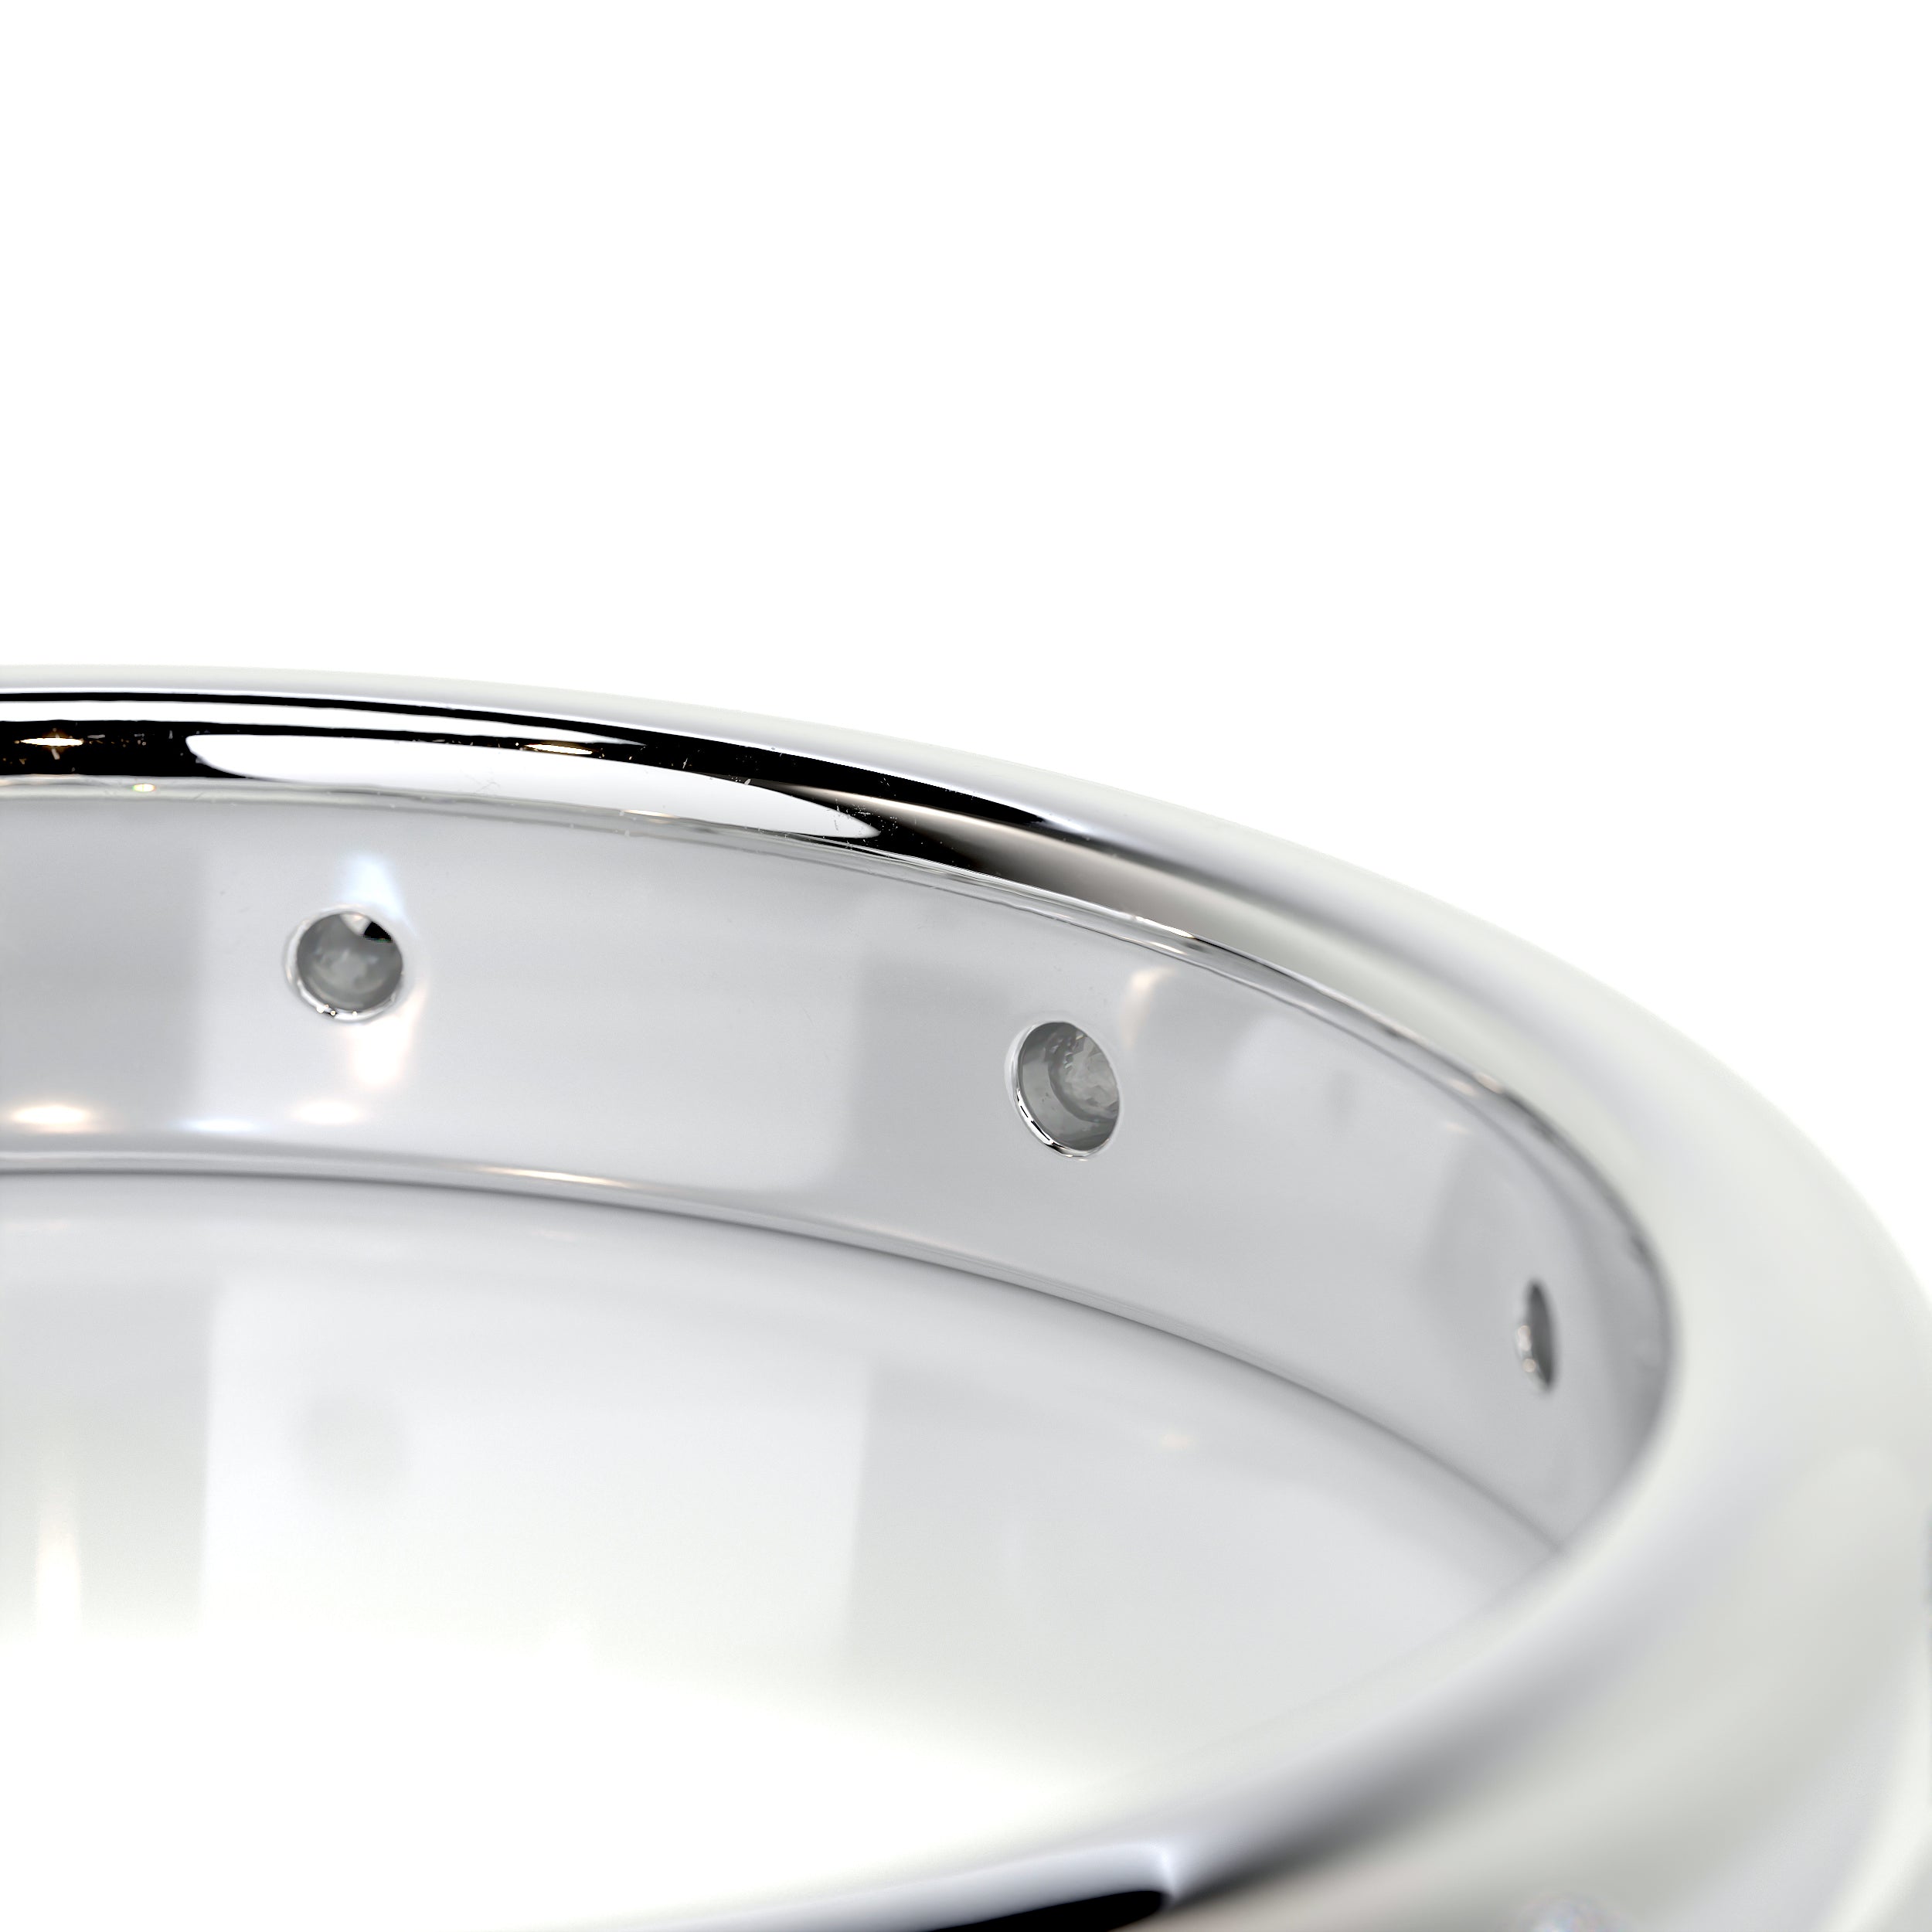 Zara Diamond Wedding Ring   (0.18 Carat) -Platinum